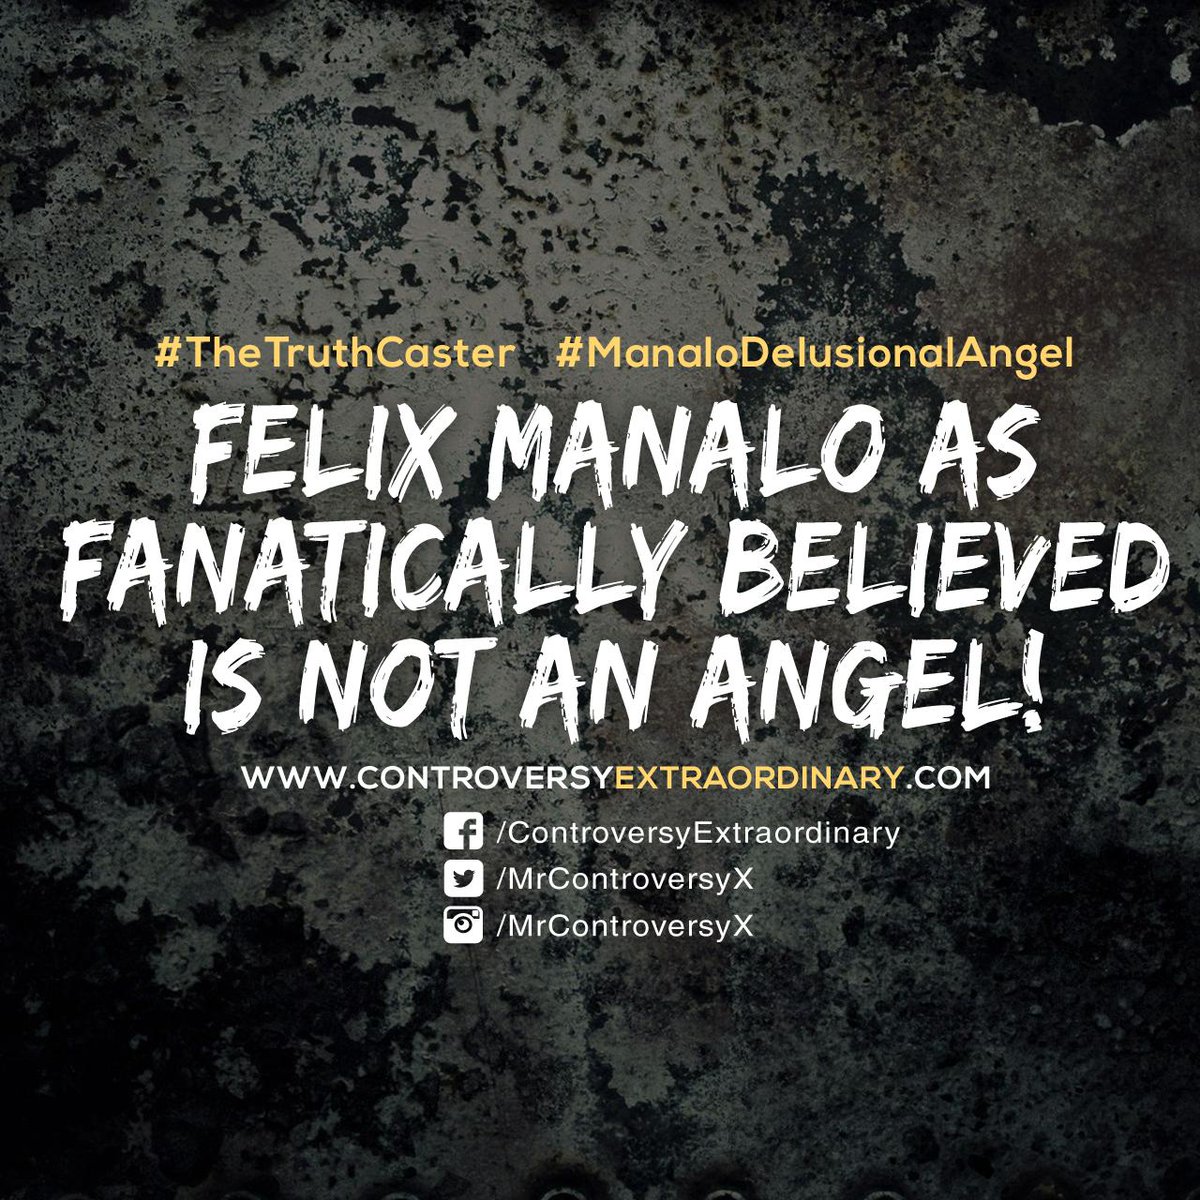 Now up! 'Felix Manalo as Fanatically Believed is not an Angel!' READ: goo.gl/L4DqN6 #ManaloDelusionalAngel